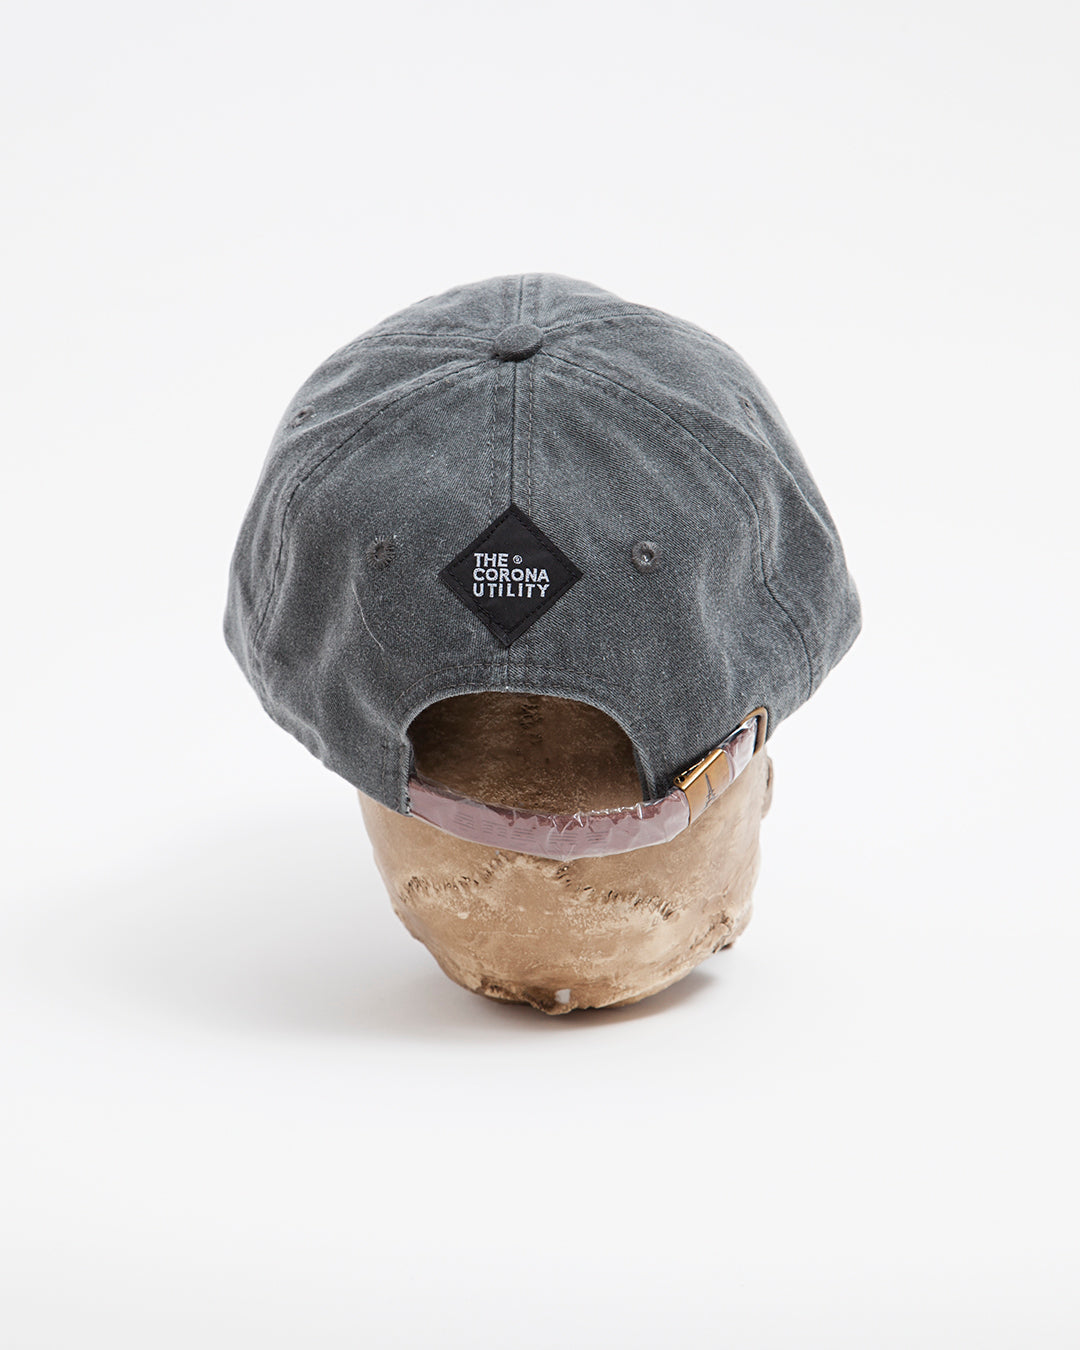 THE CORONA UTILITY - CA020・CORONA LOGO EMBROIDERY CAP / Grey × Black Embroidery